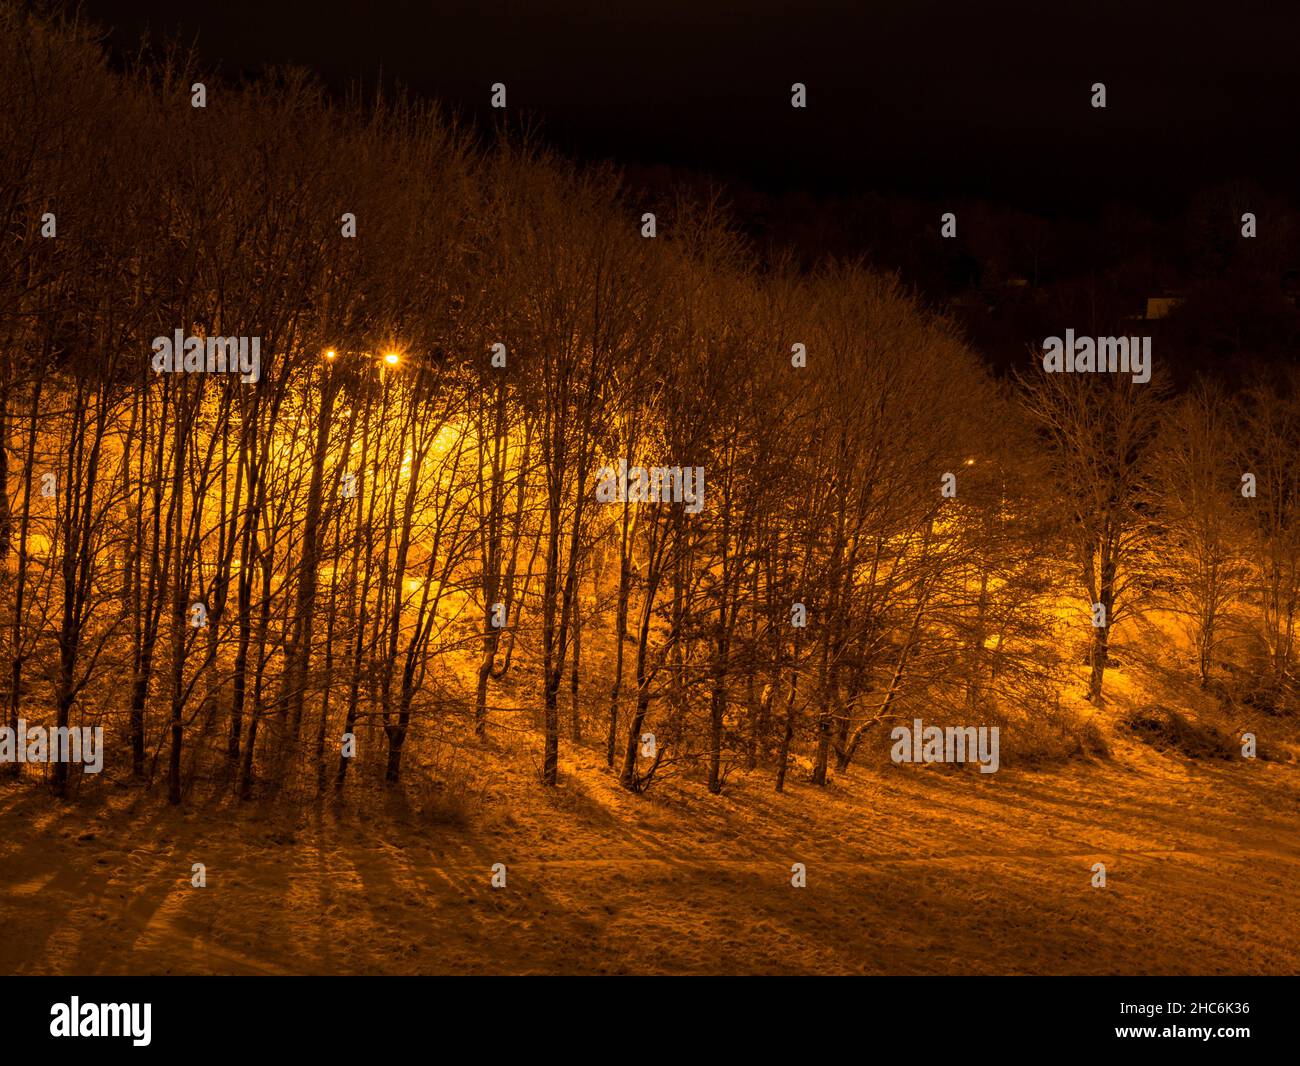 Orange-yellow light from street lamps illuminates snowy trees and meadow at night Stock Photo